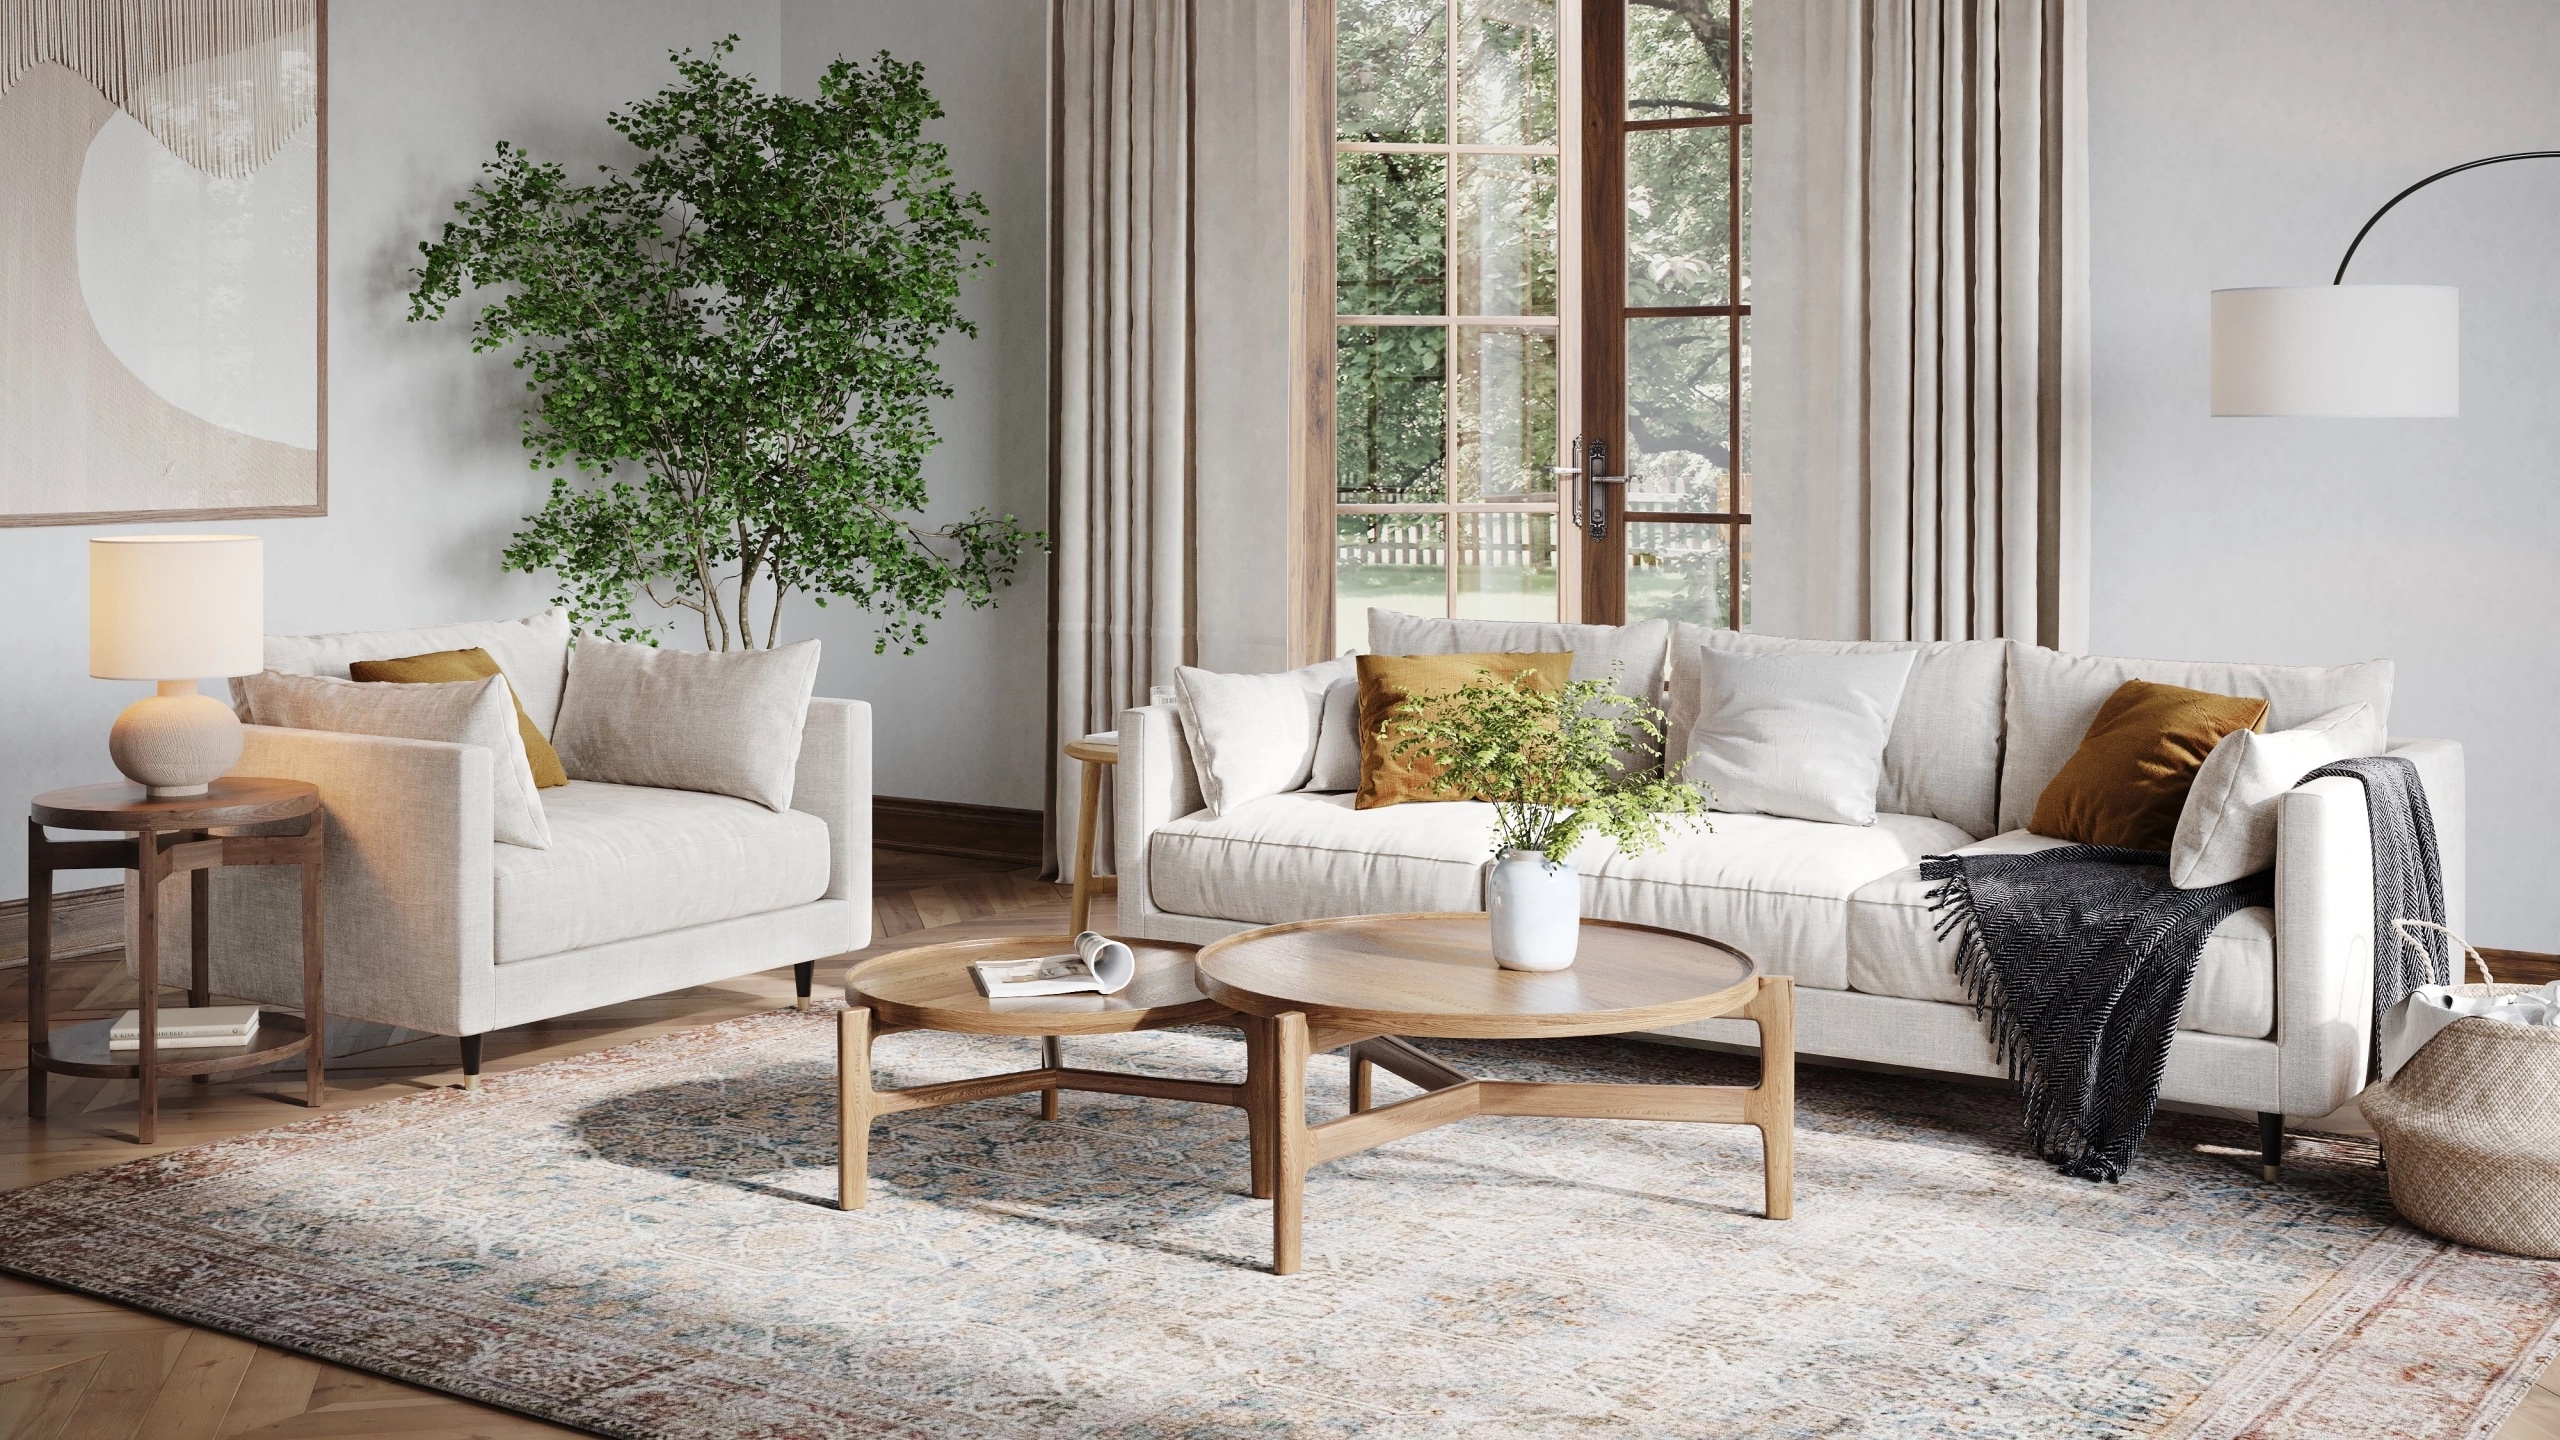 3D rendering for a living room furniture